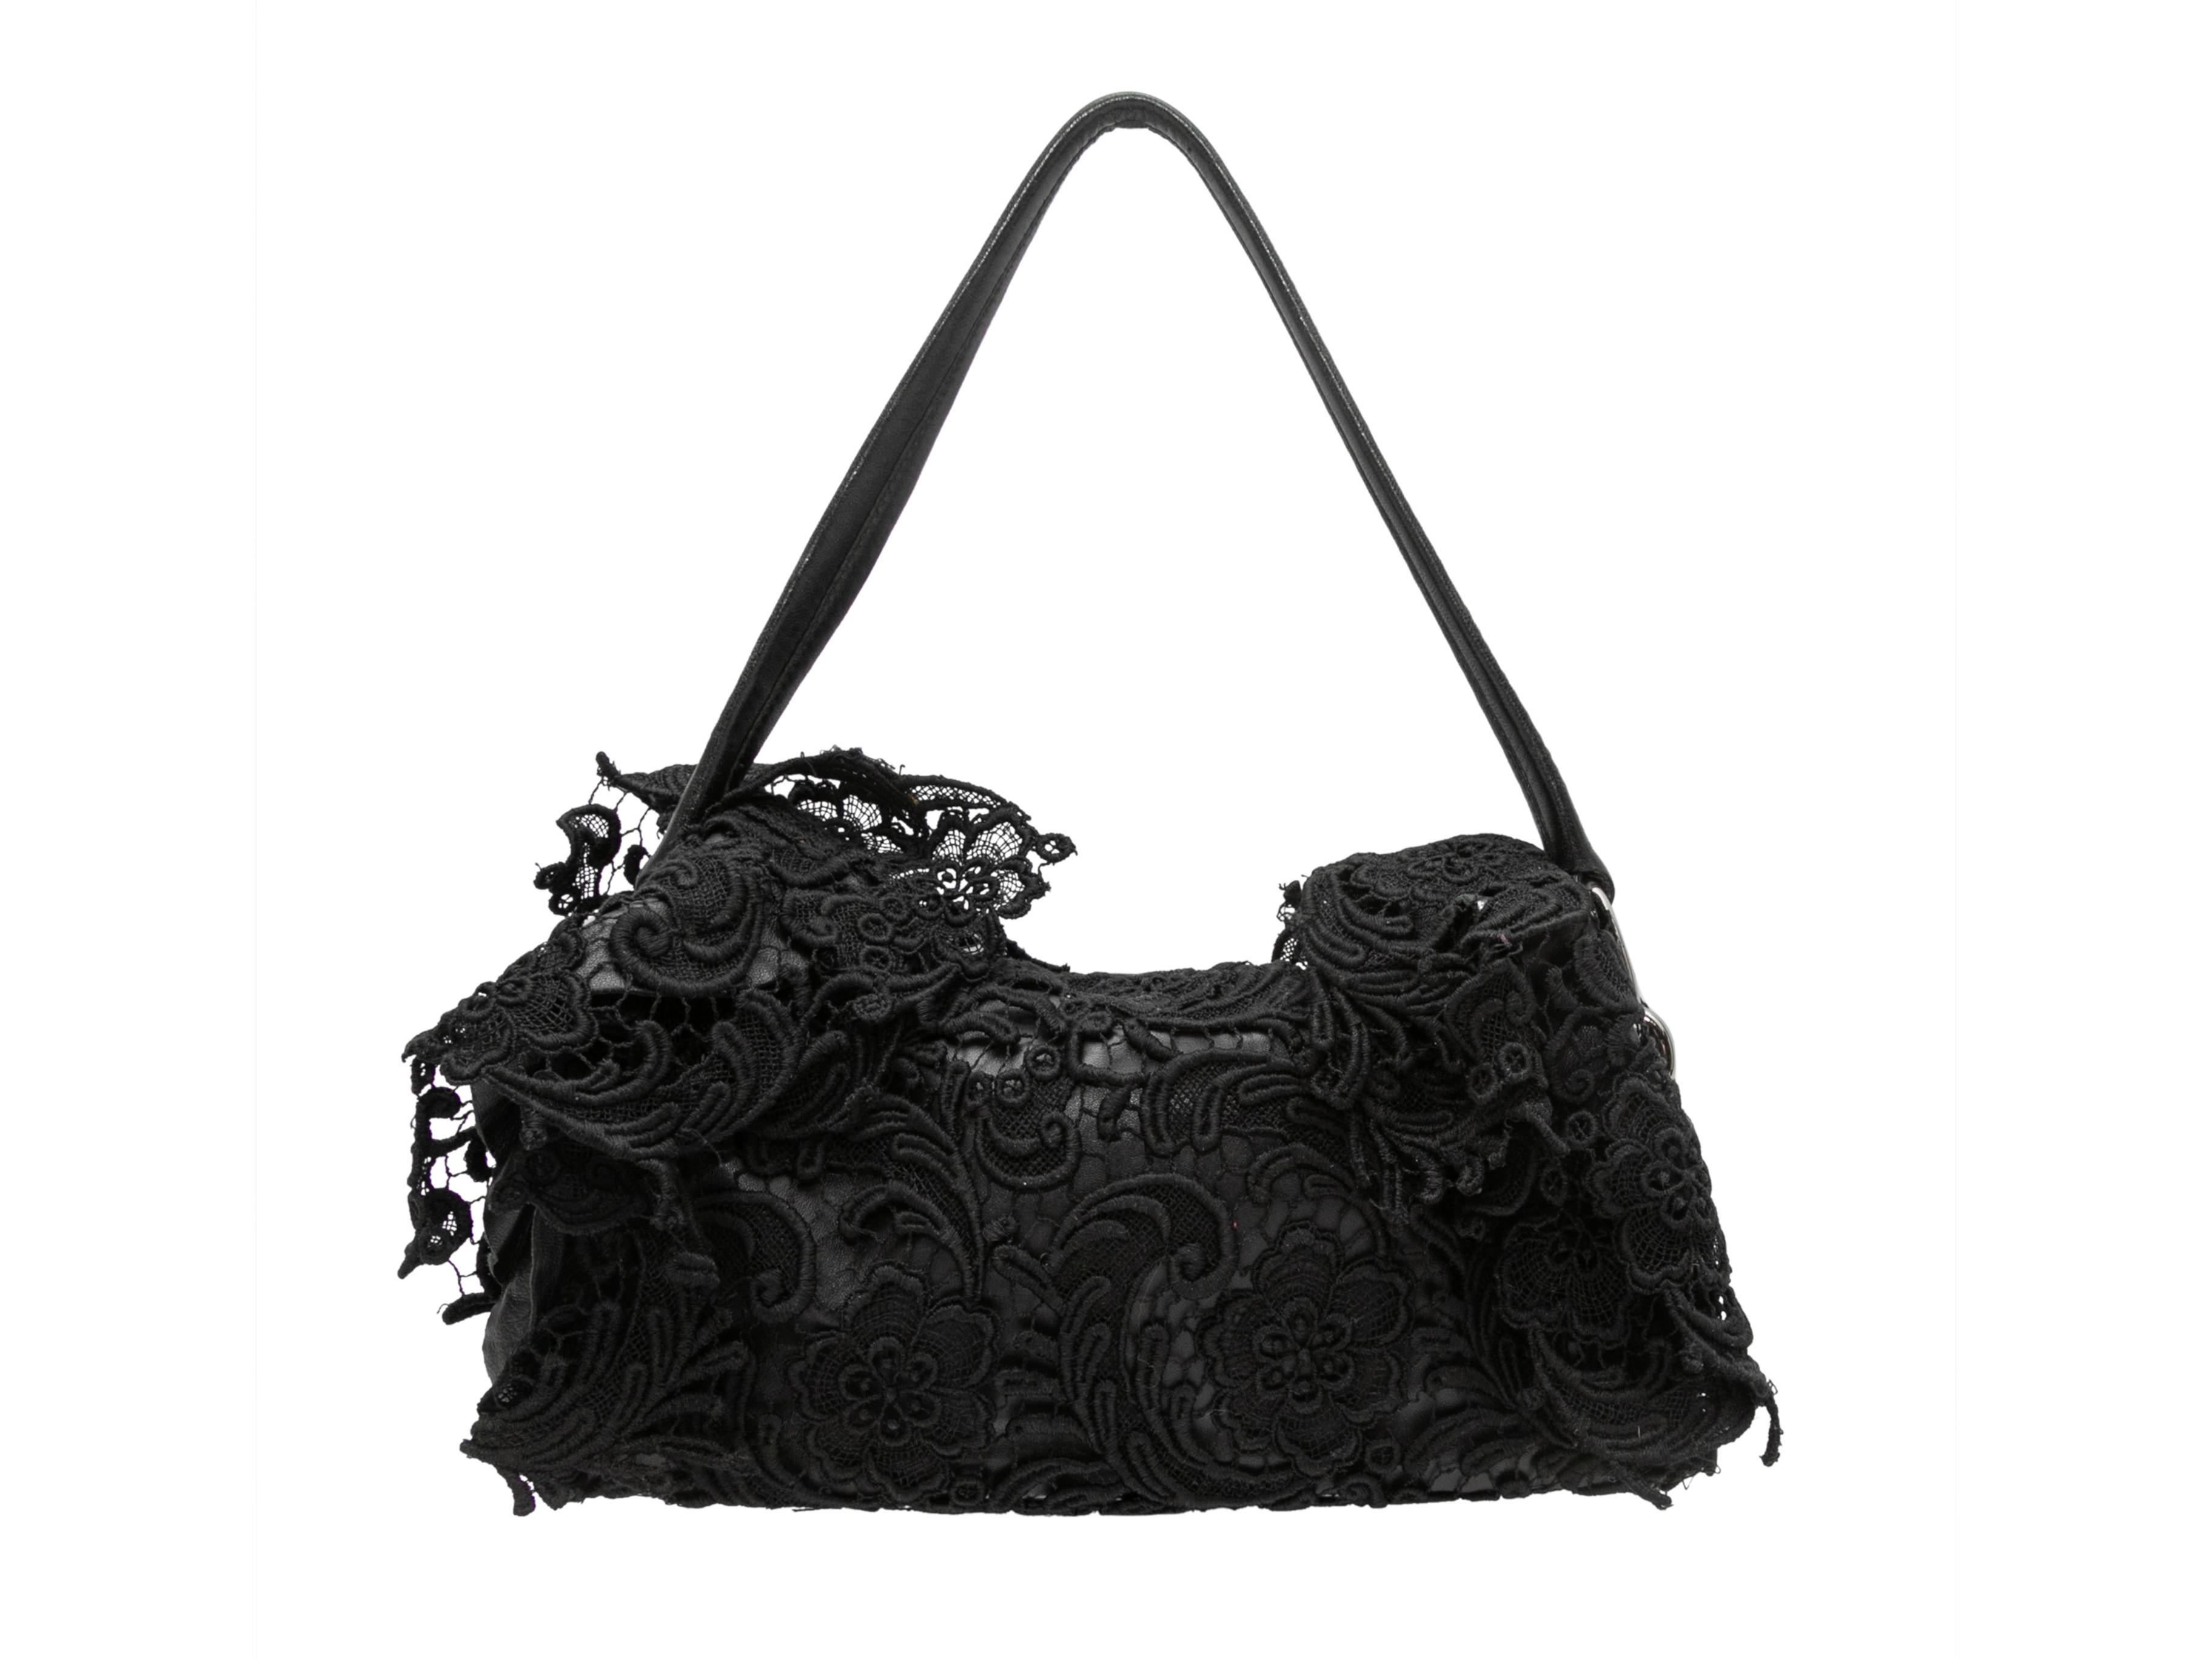 Black Prada Guipure Lace Ruffle Shoulder Bag. This shoulder bag features a guipure lace and leather body, silver-tone hardware, and a single shoulder strap. 12